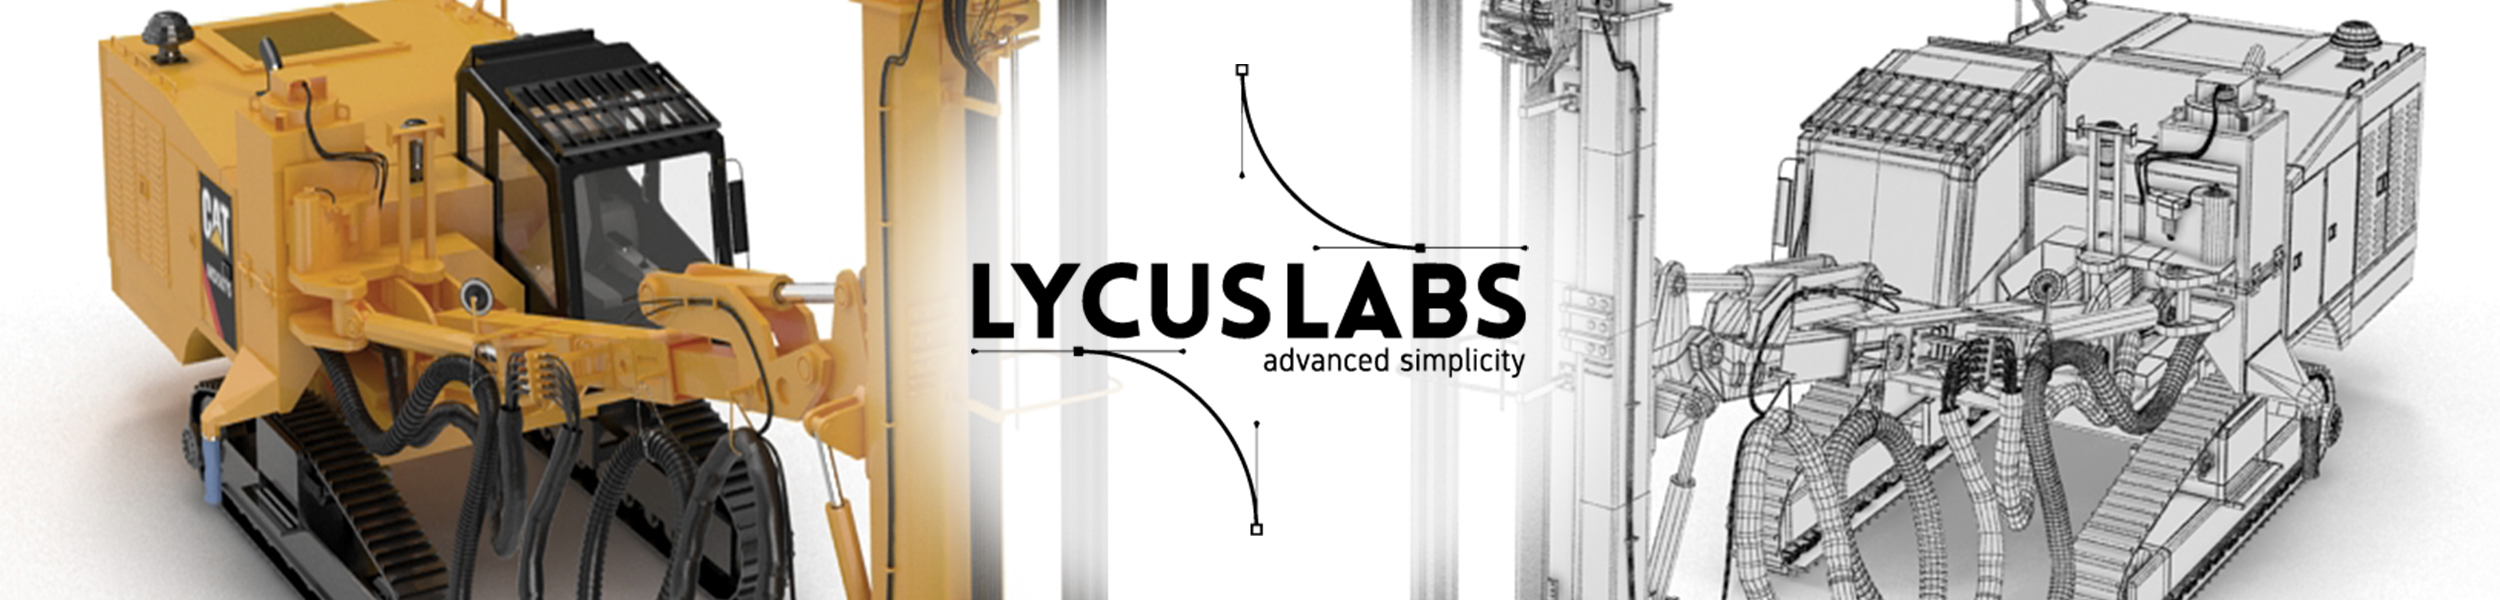 lycuslabs slider2